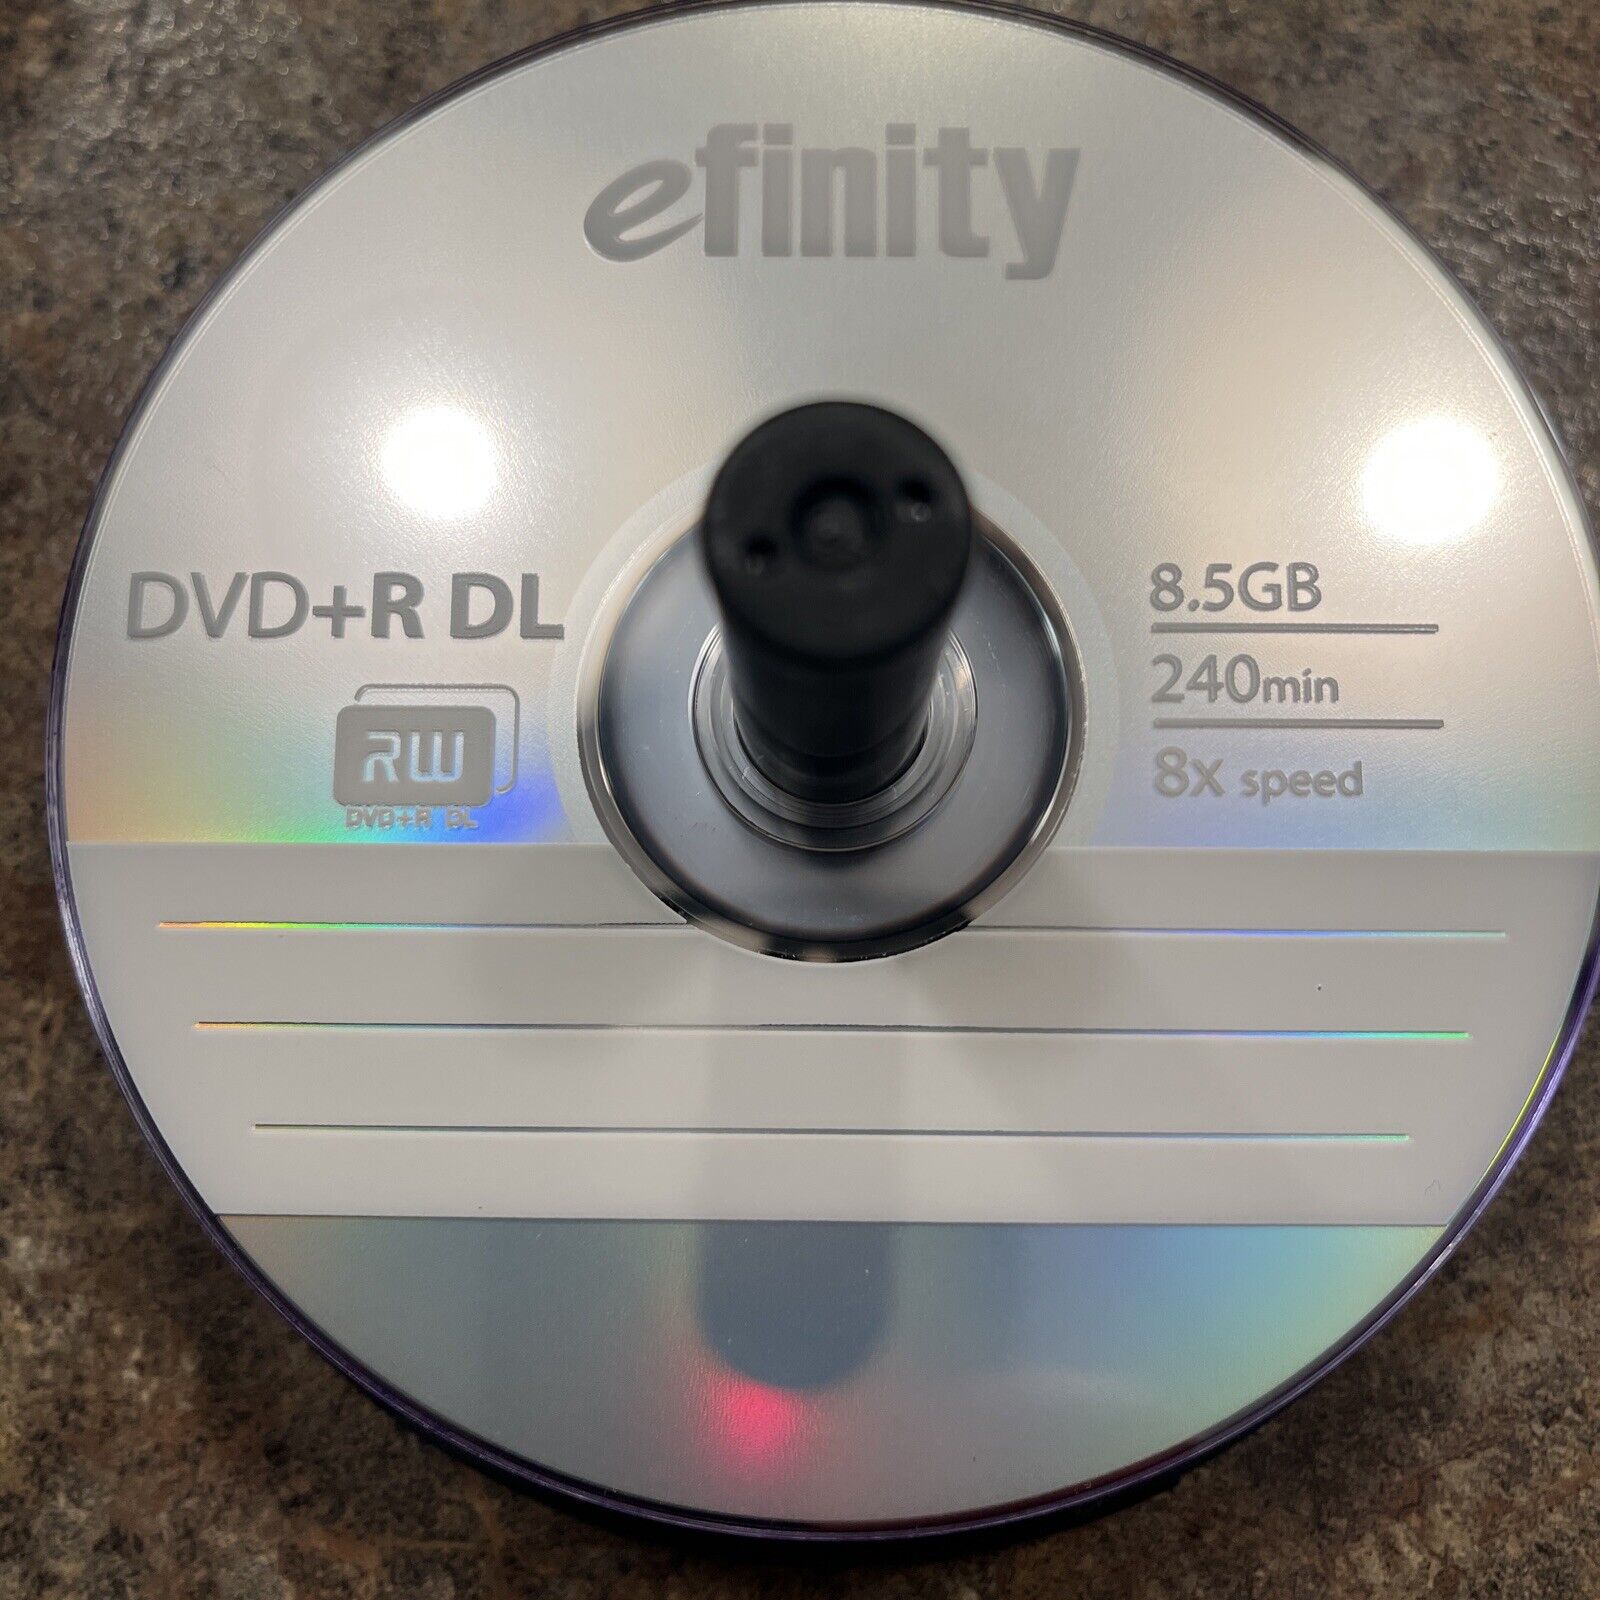 24 Blank 8X DVD+R DL Dual Double Layer 8.5GB efinity New Open Box